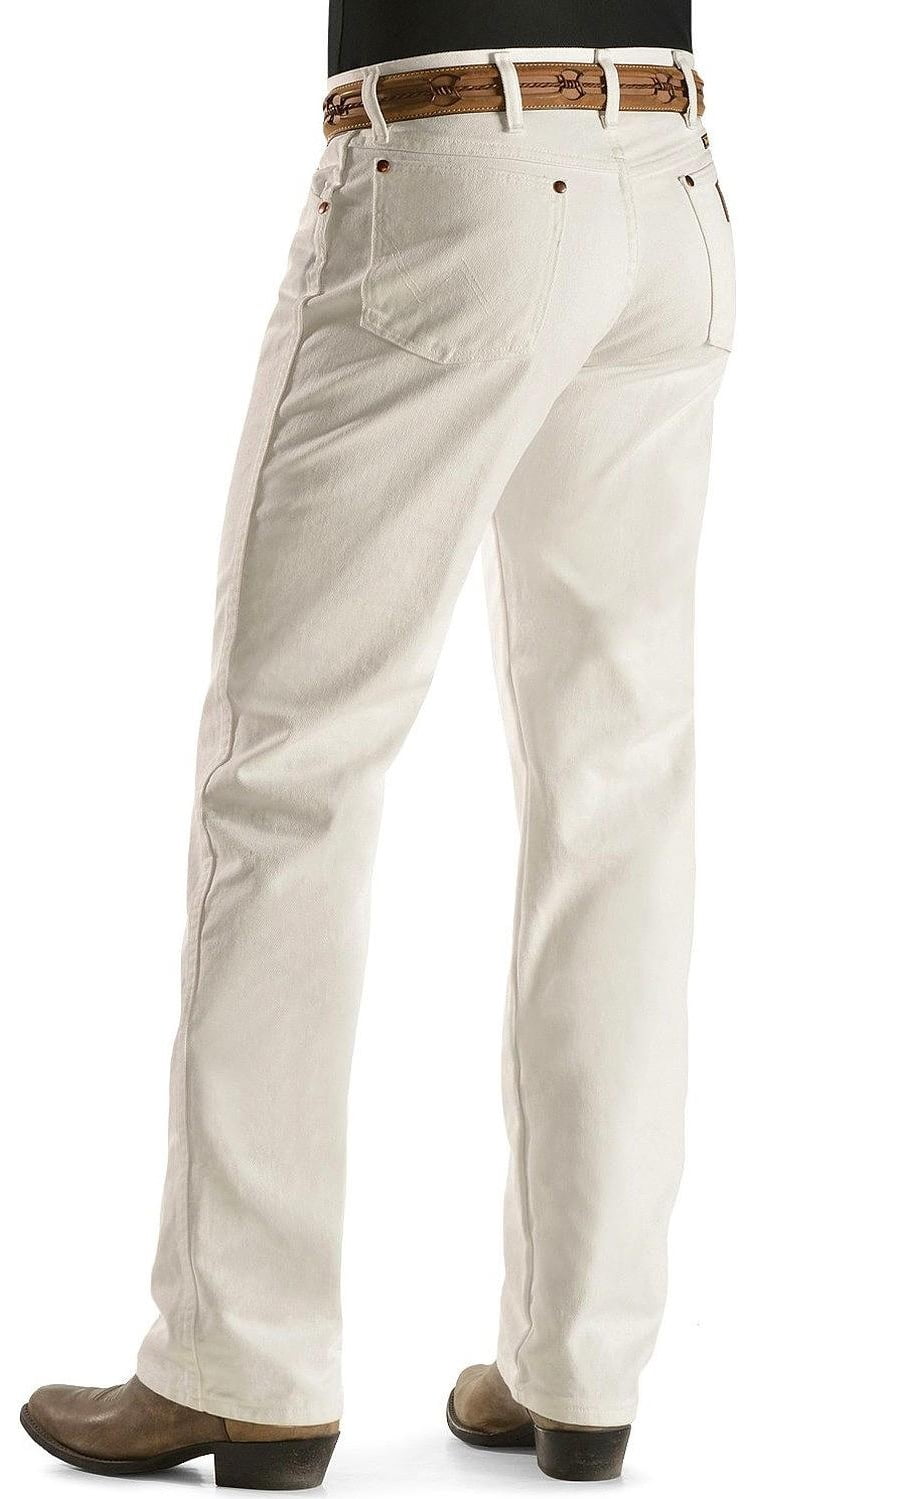 wrangler men's cowboy cut original fit jean, white, 42x30 